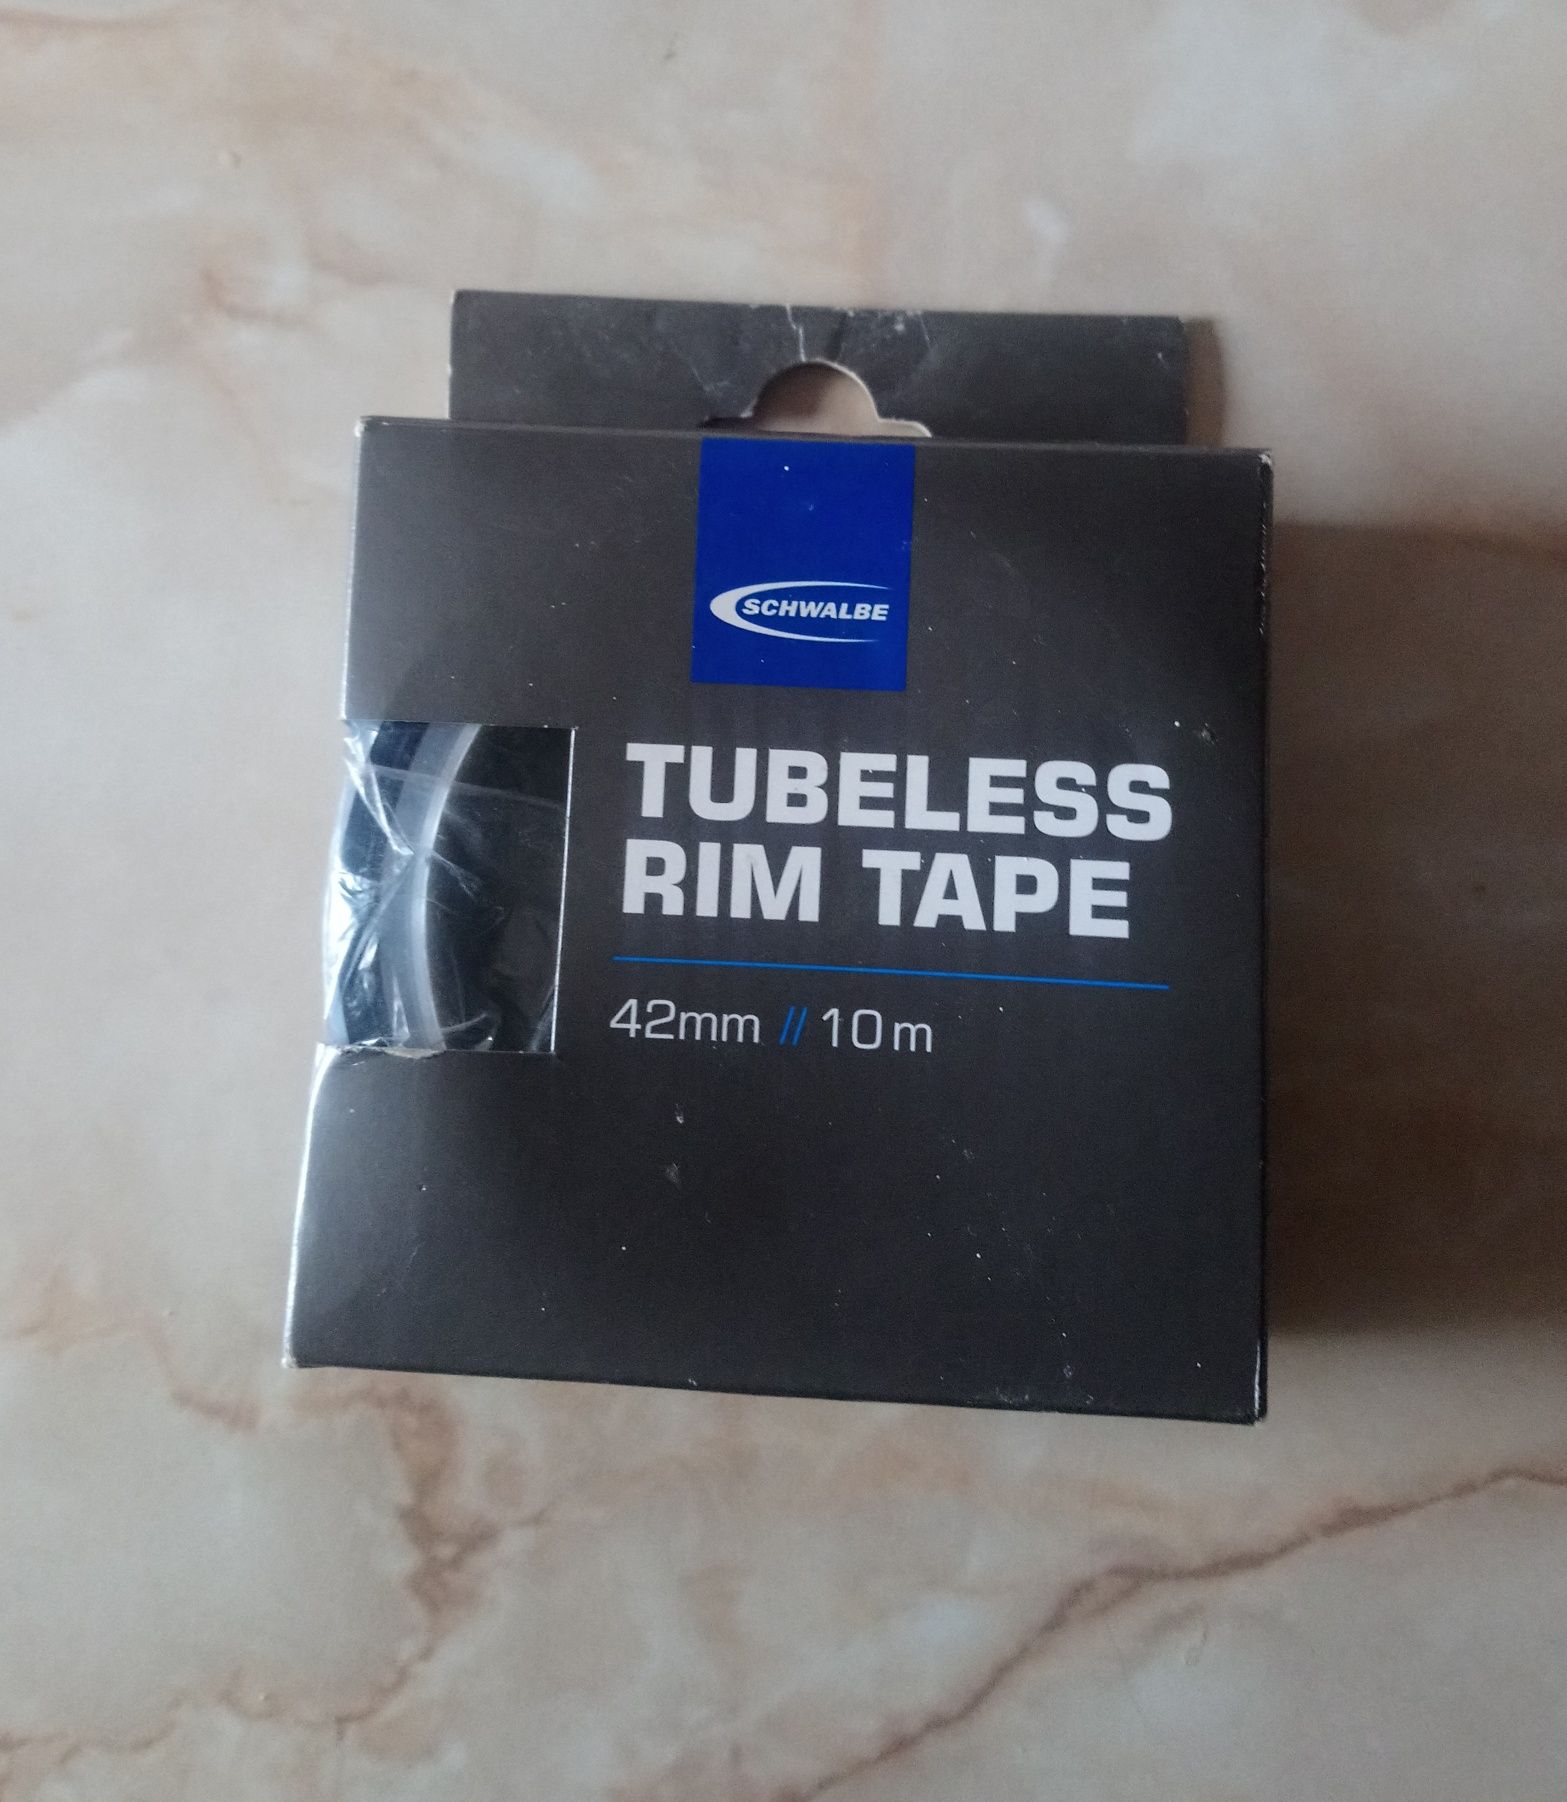 Schwalbe tubeless rim tape